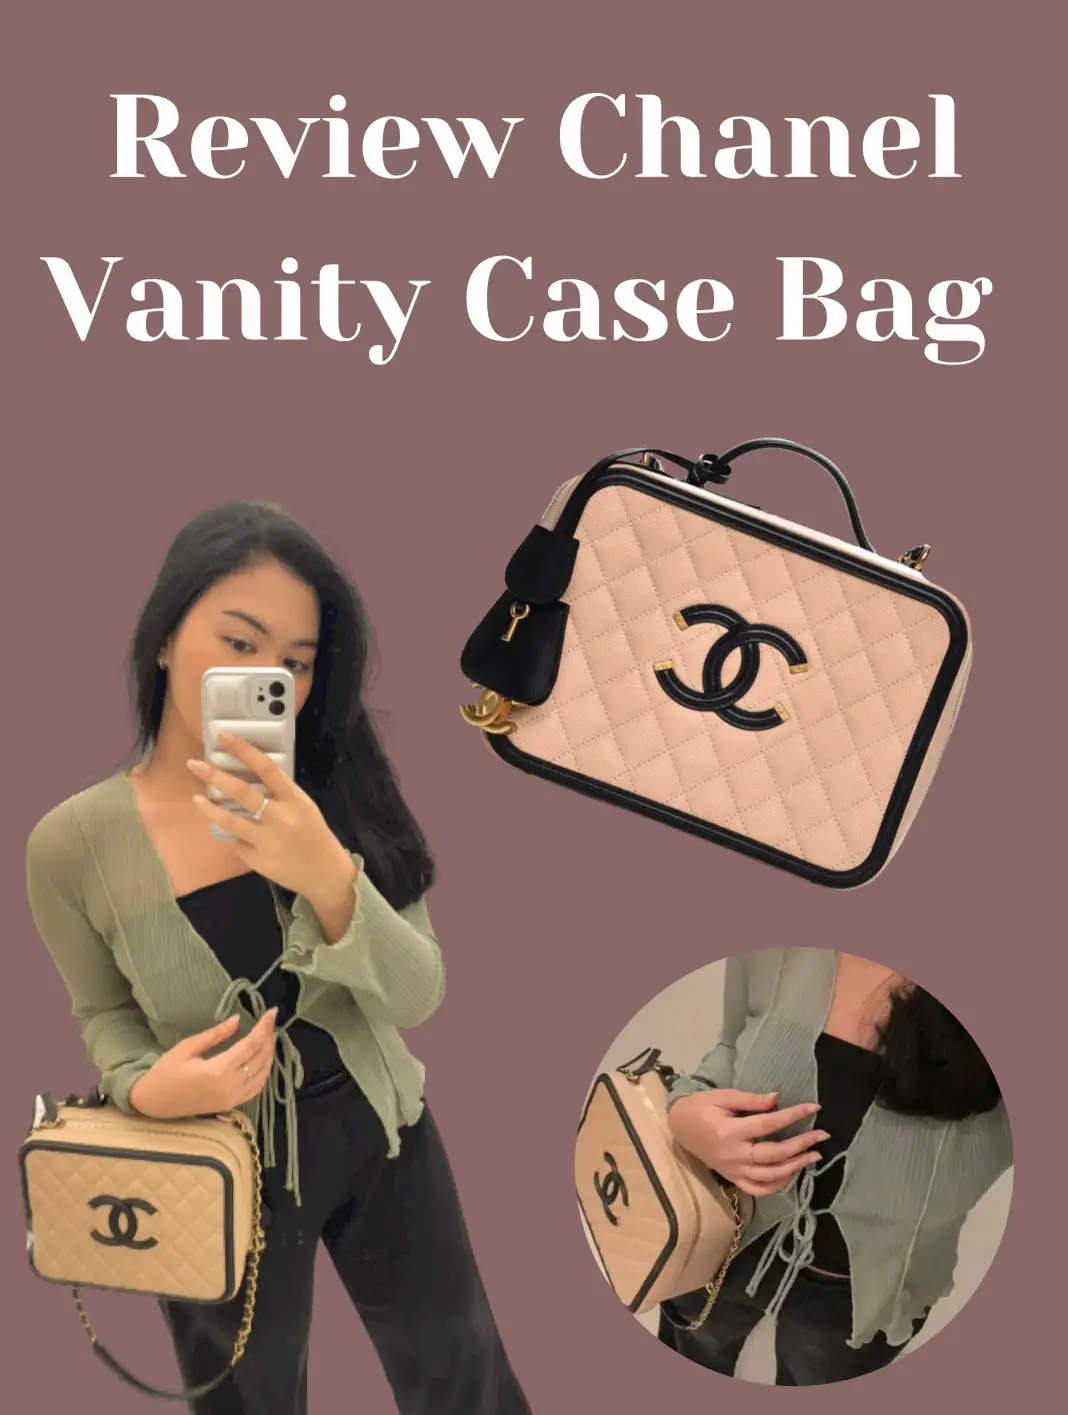 Chanel Vanity Case Review  Chanel vanity case, Vanity case, Chanel